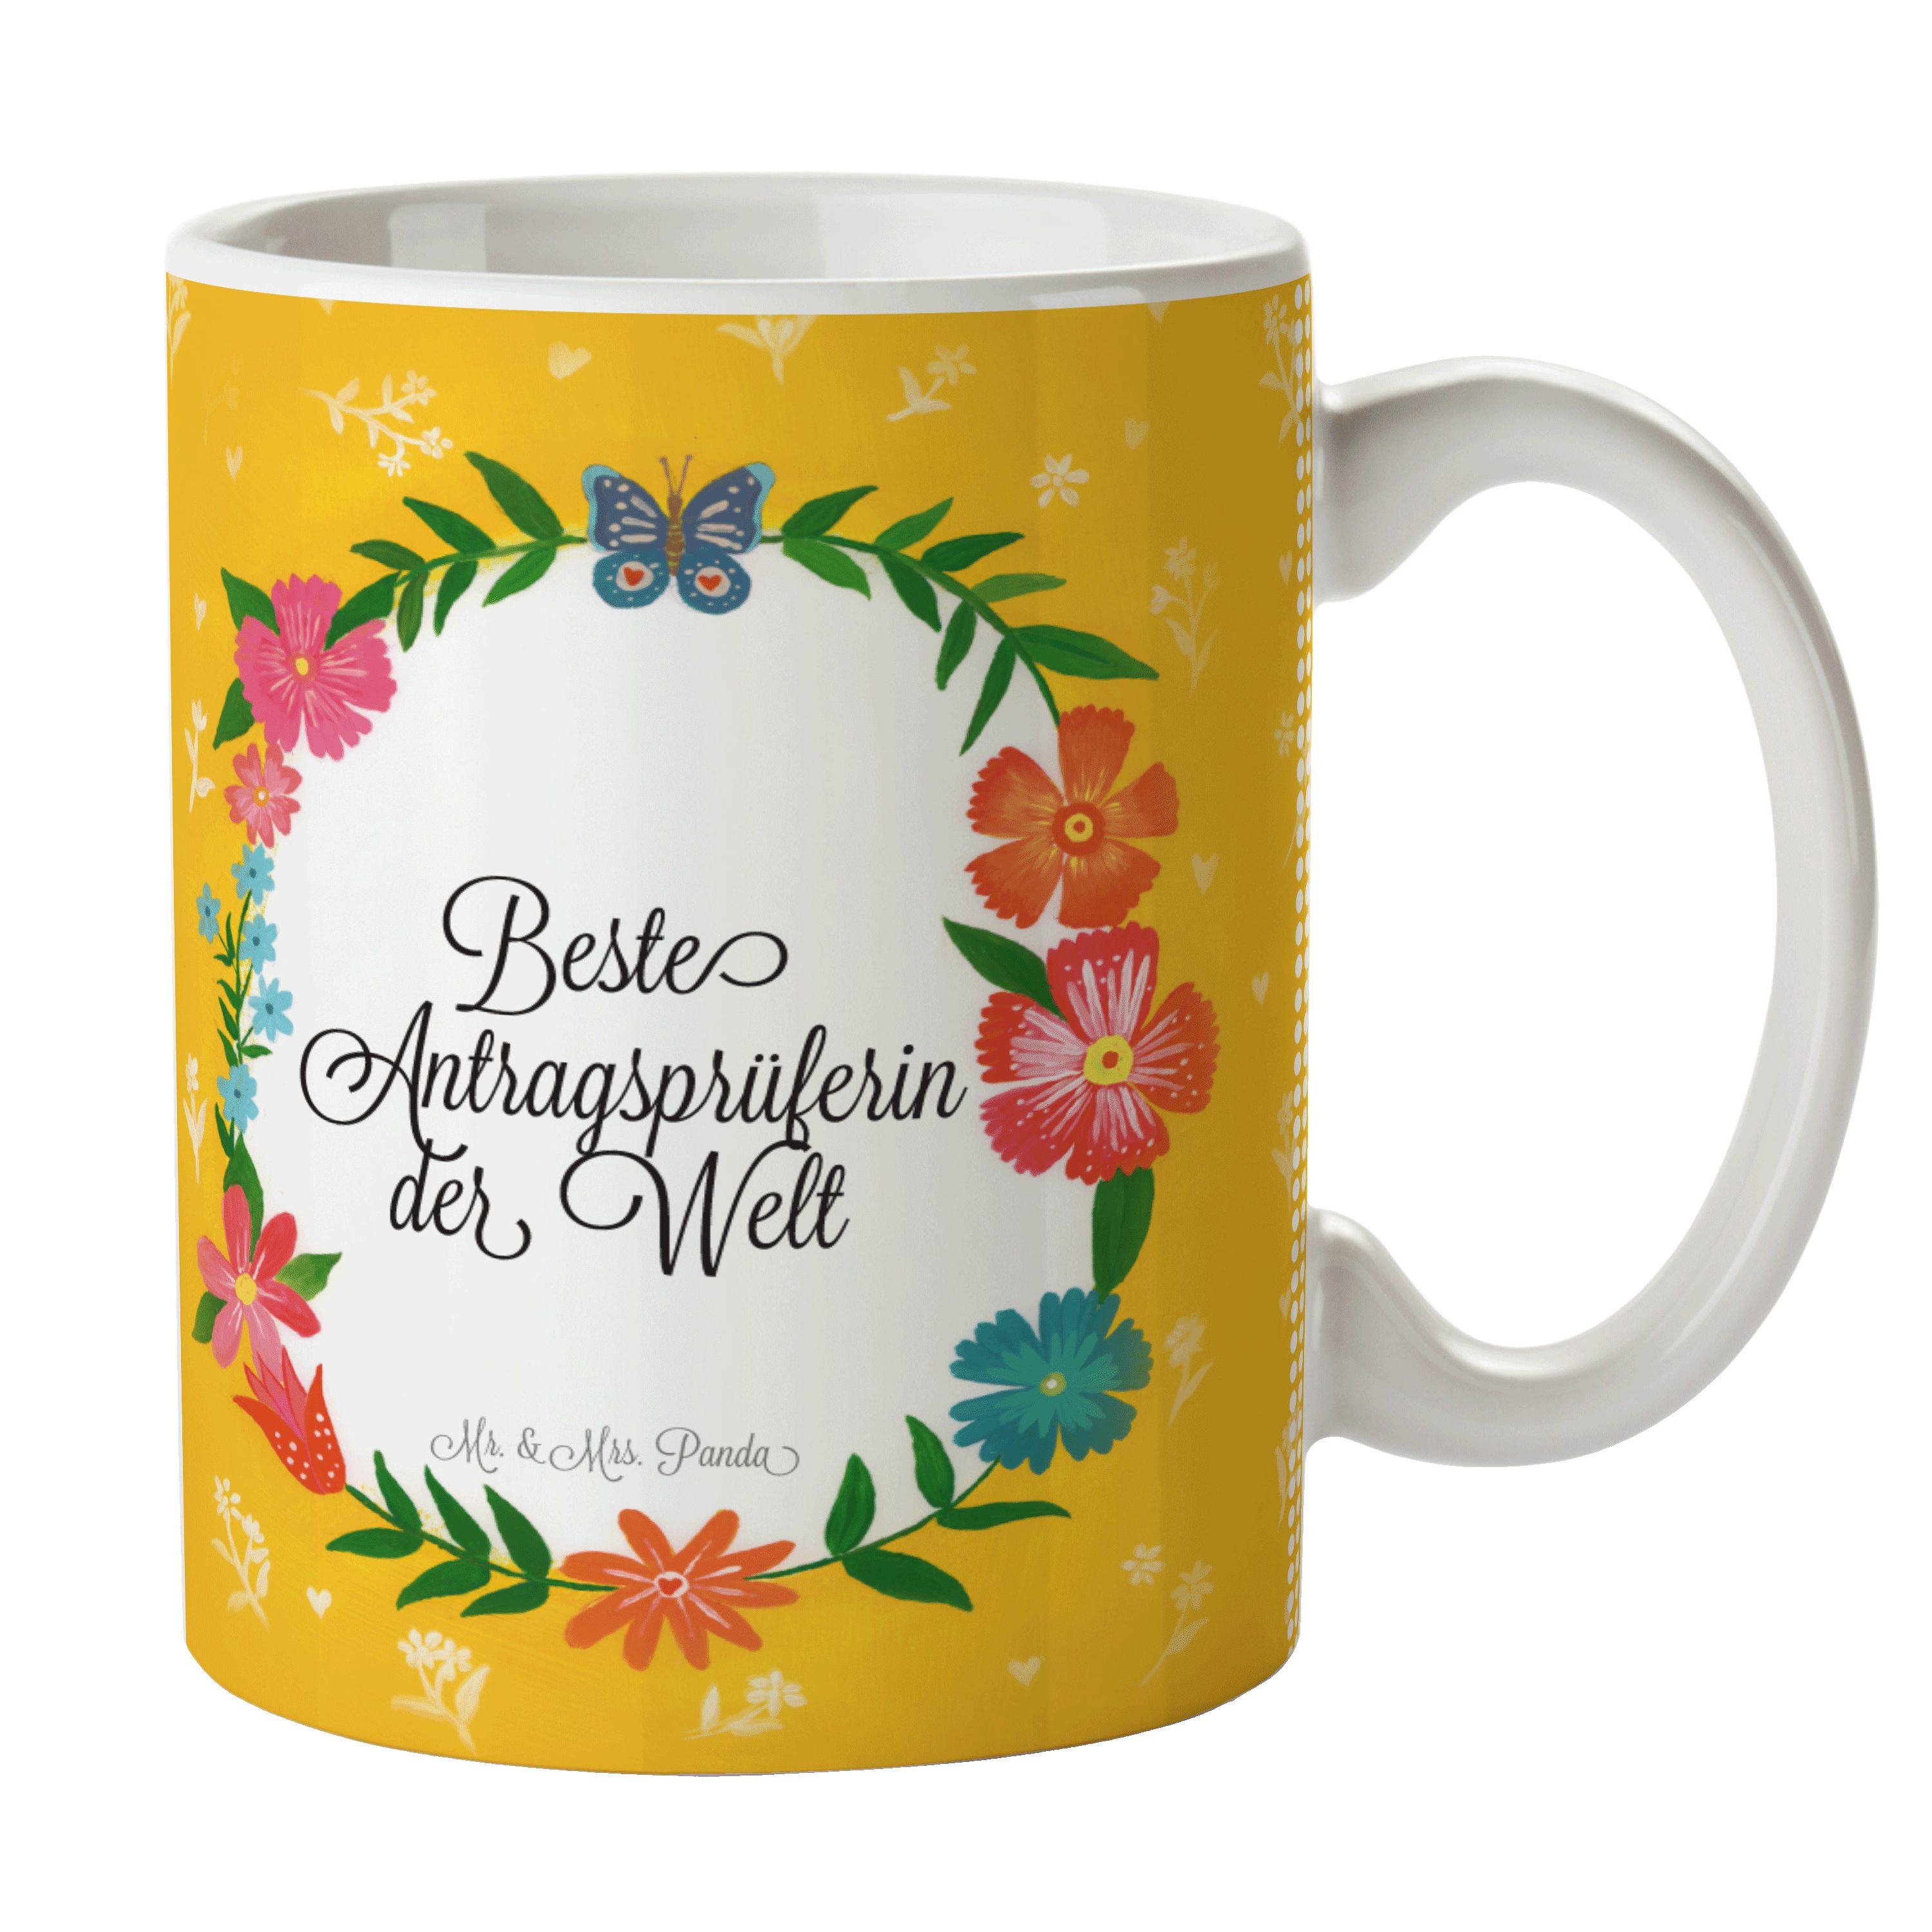 Mr. & Mrs. Panda Tasse Geschenk, Antragsprüferin Keramik Tasse, - Beruf, Gratulation, Büro Teetasse